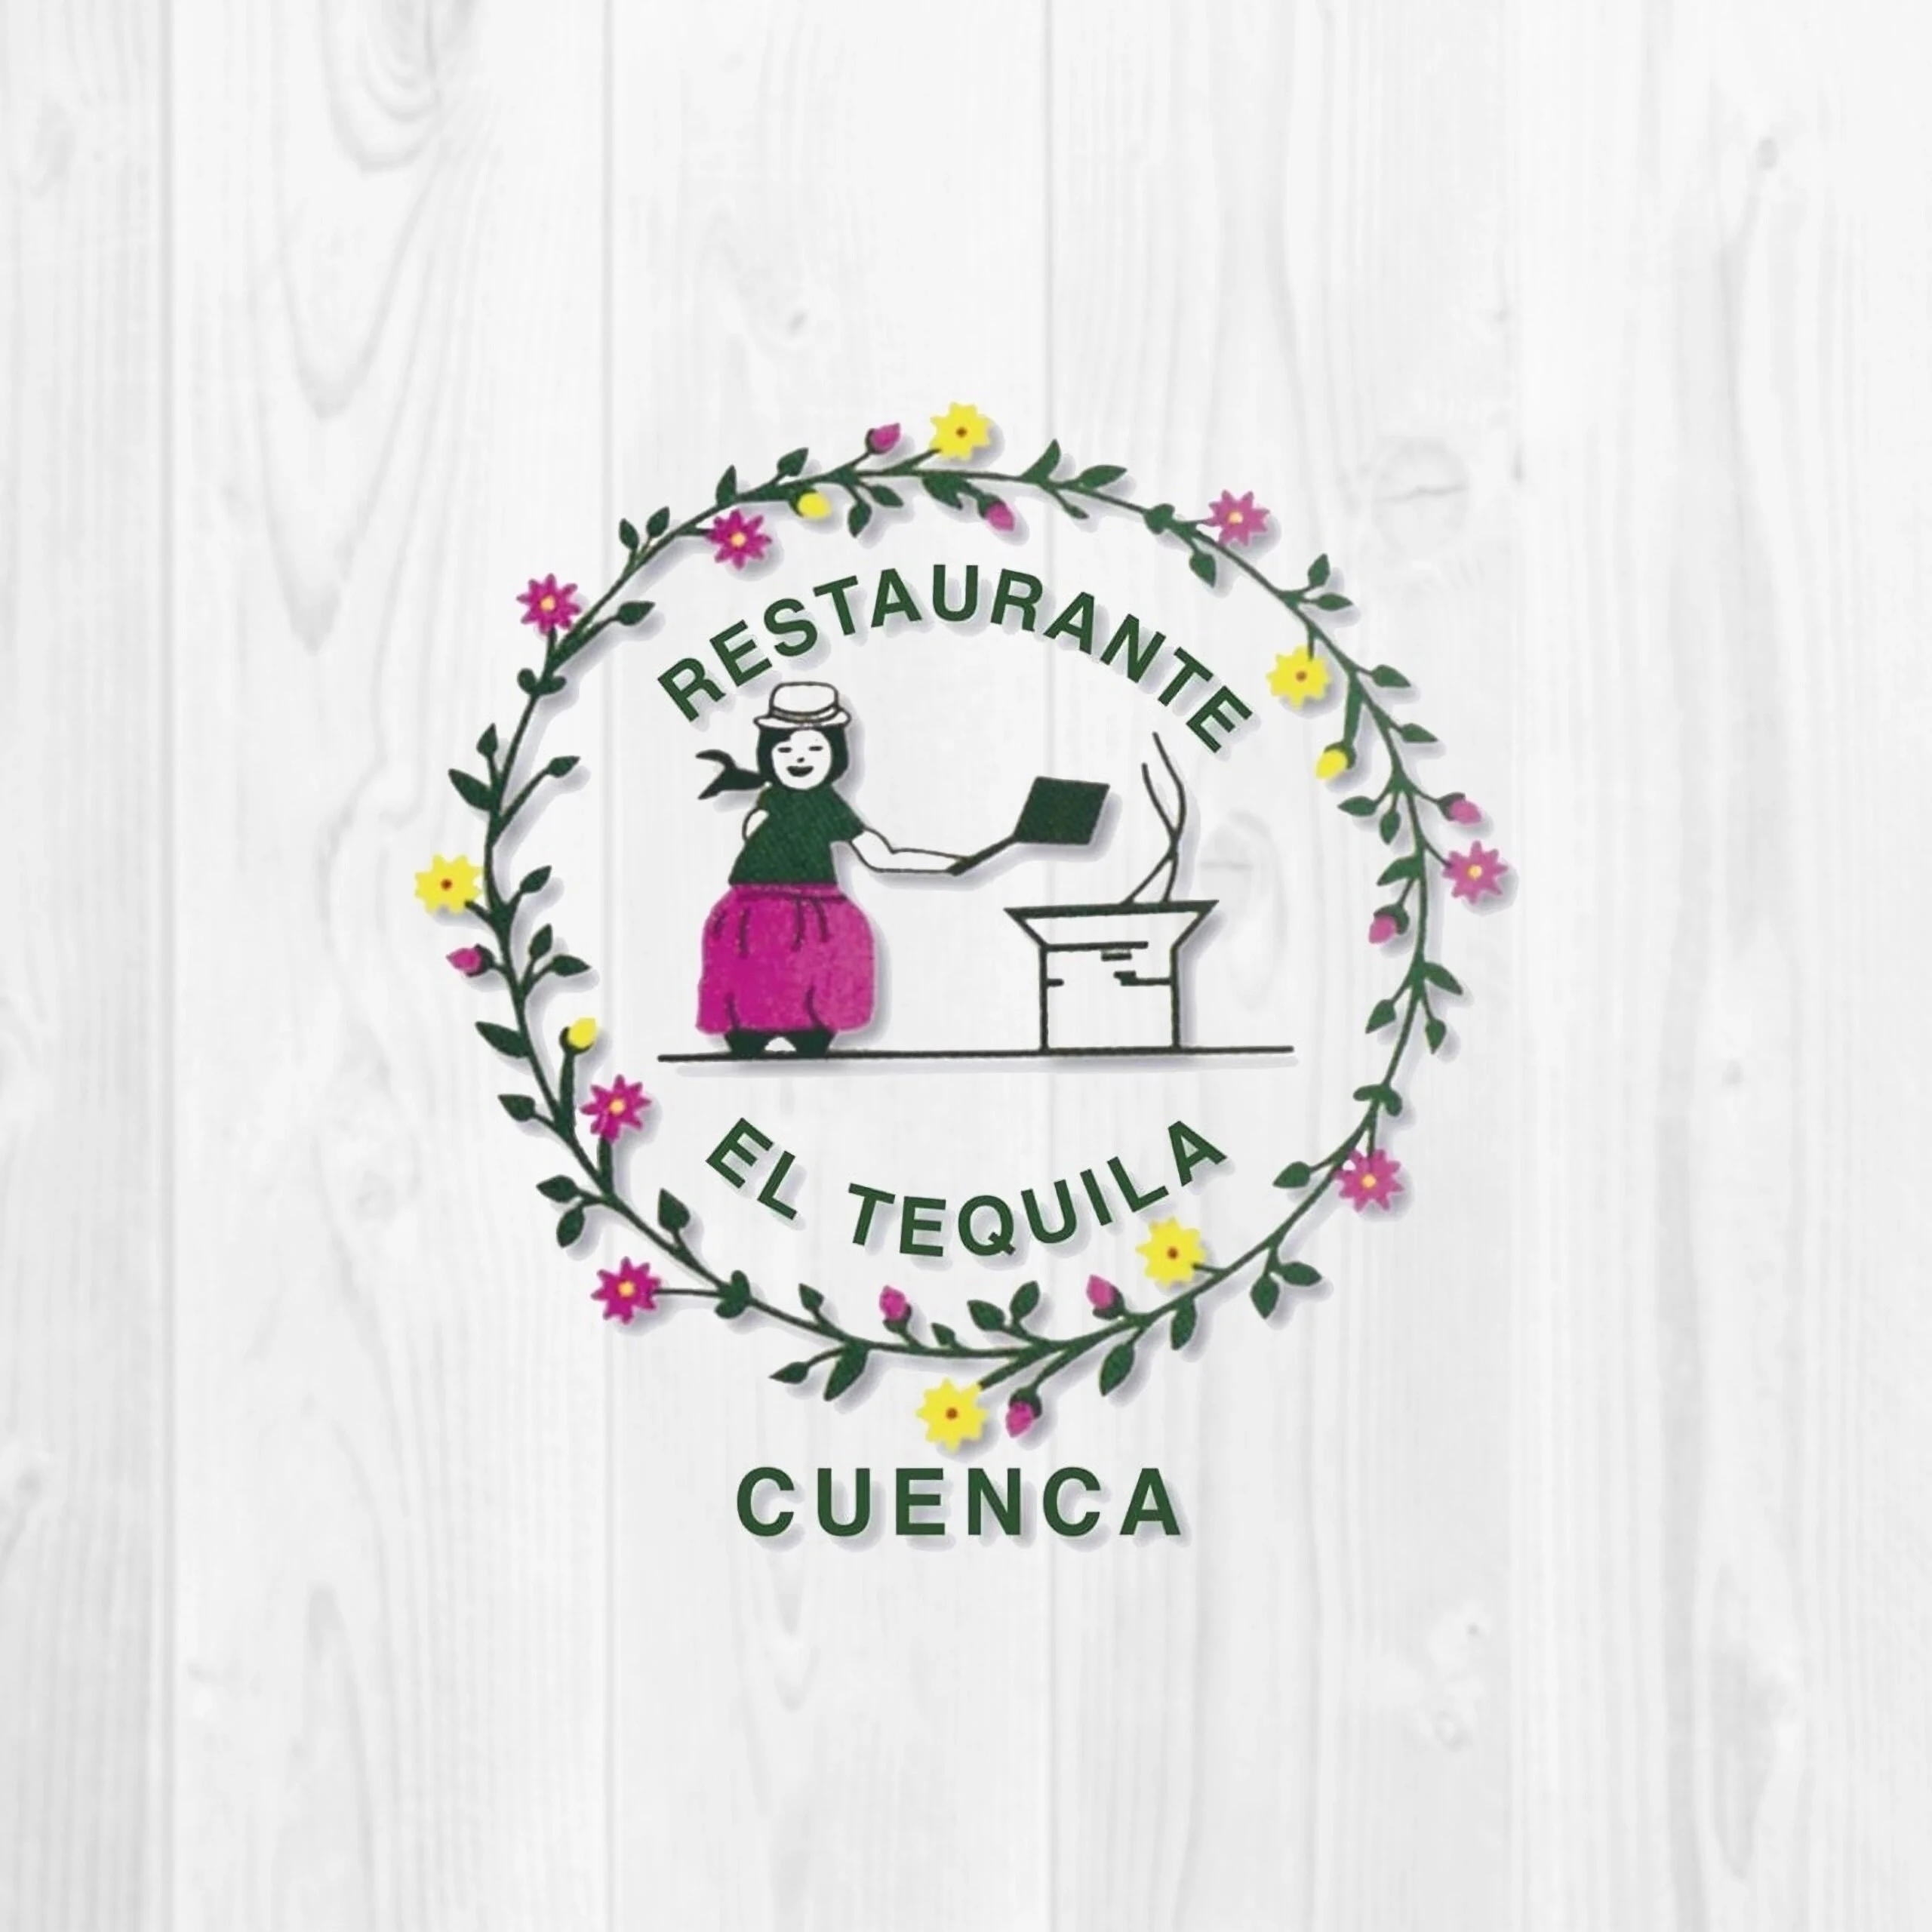 Restaurantes-restaurante-tequila-17910